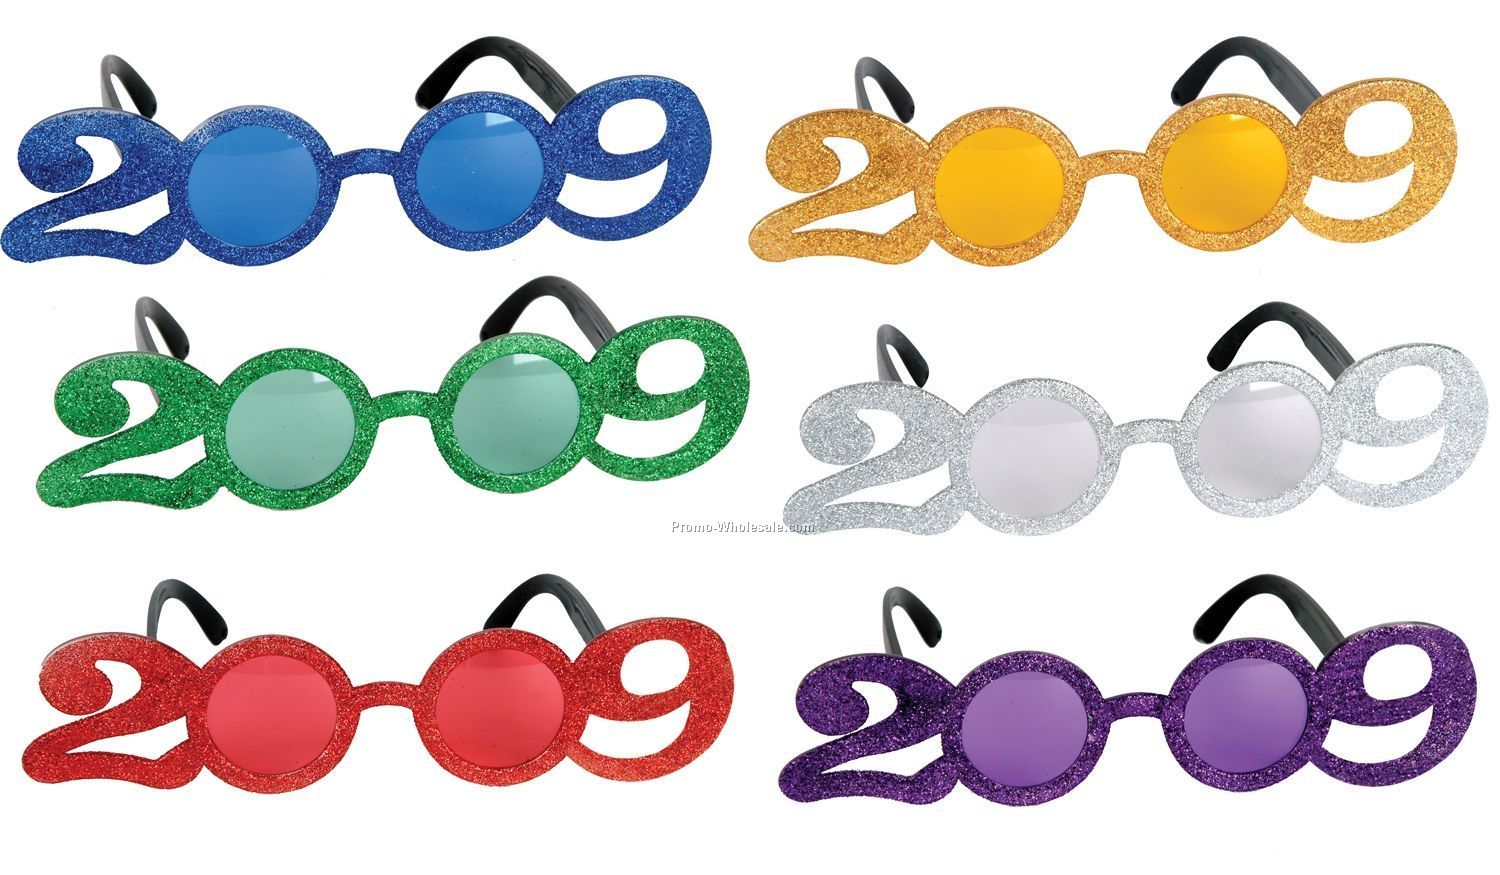 Year 2009 Glittered Plastic Eyeglasses (Full Head Size)